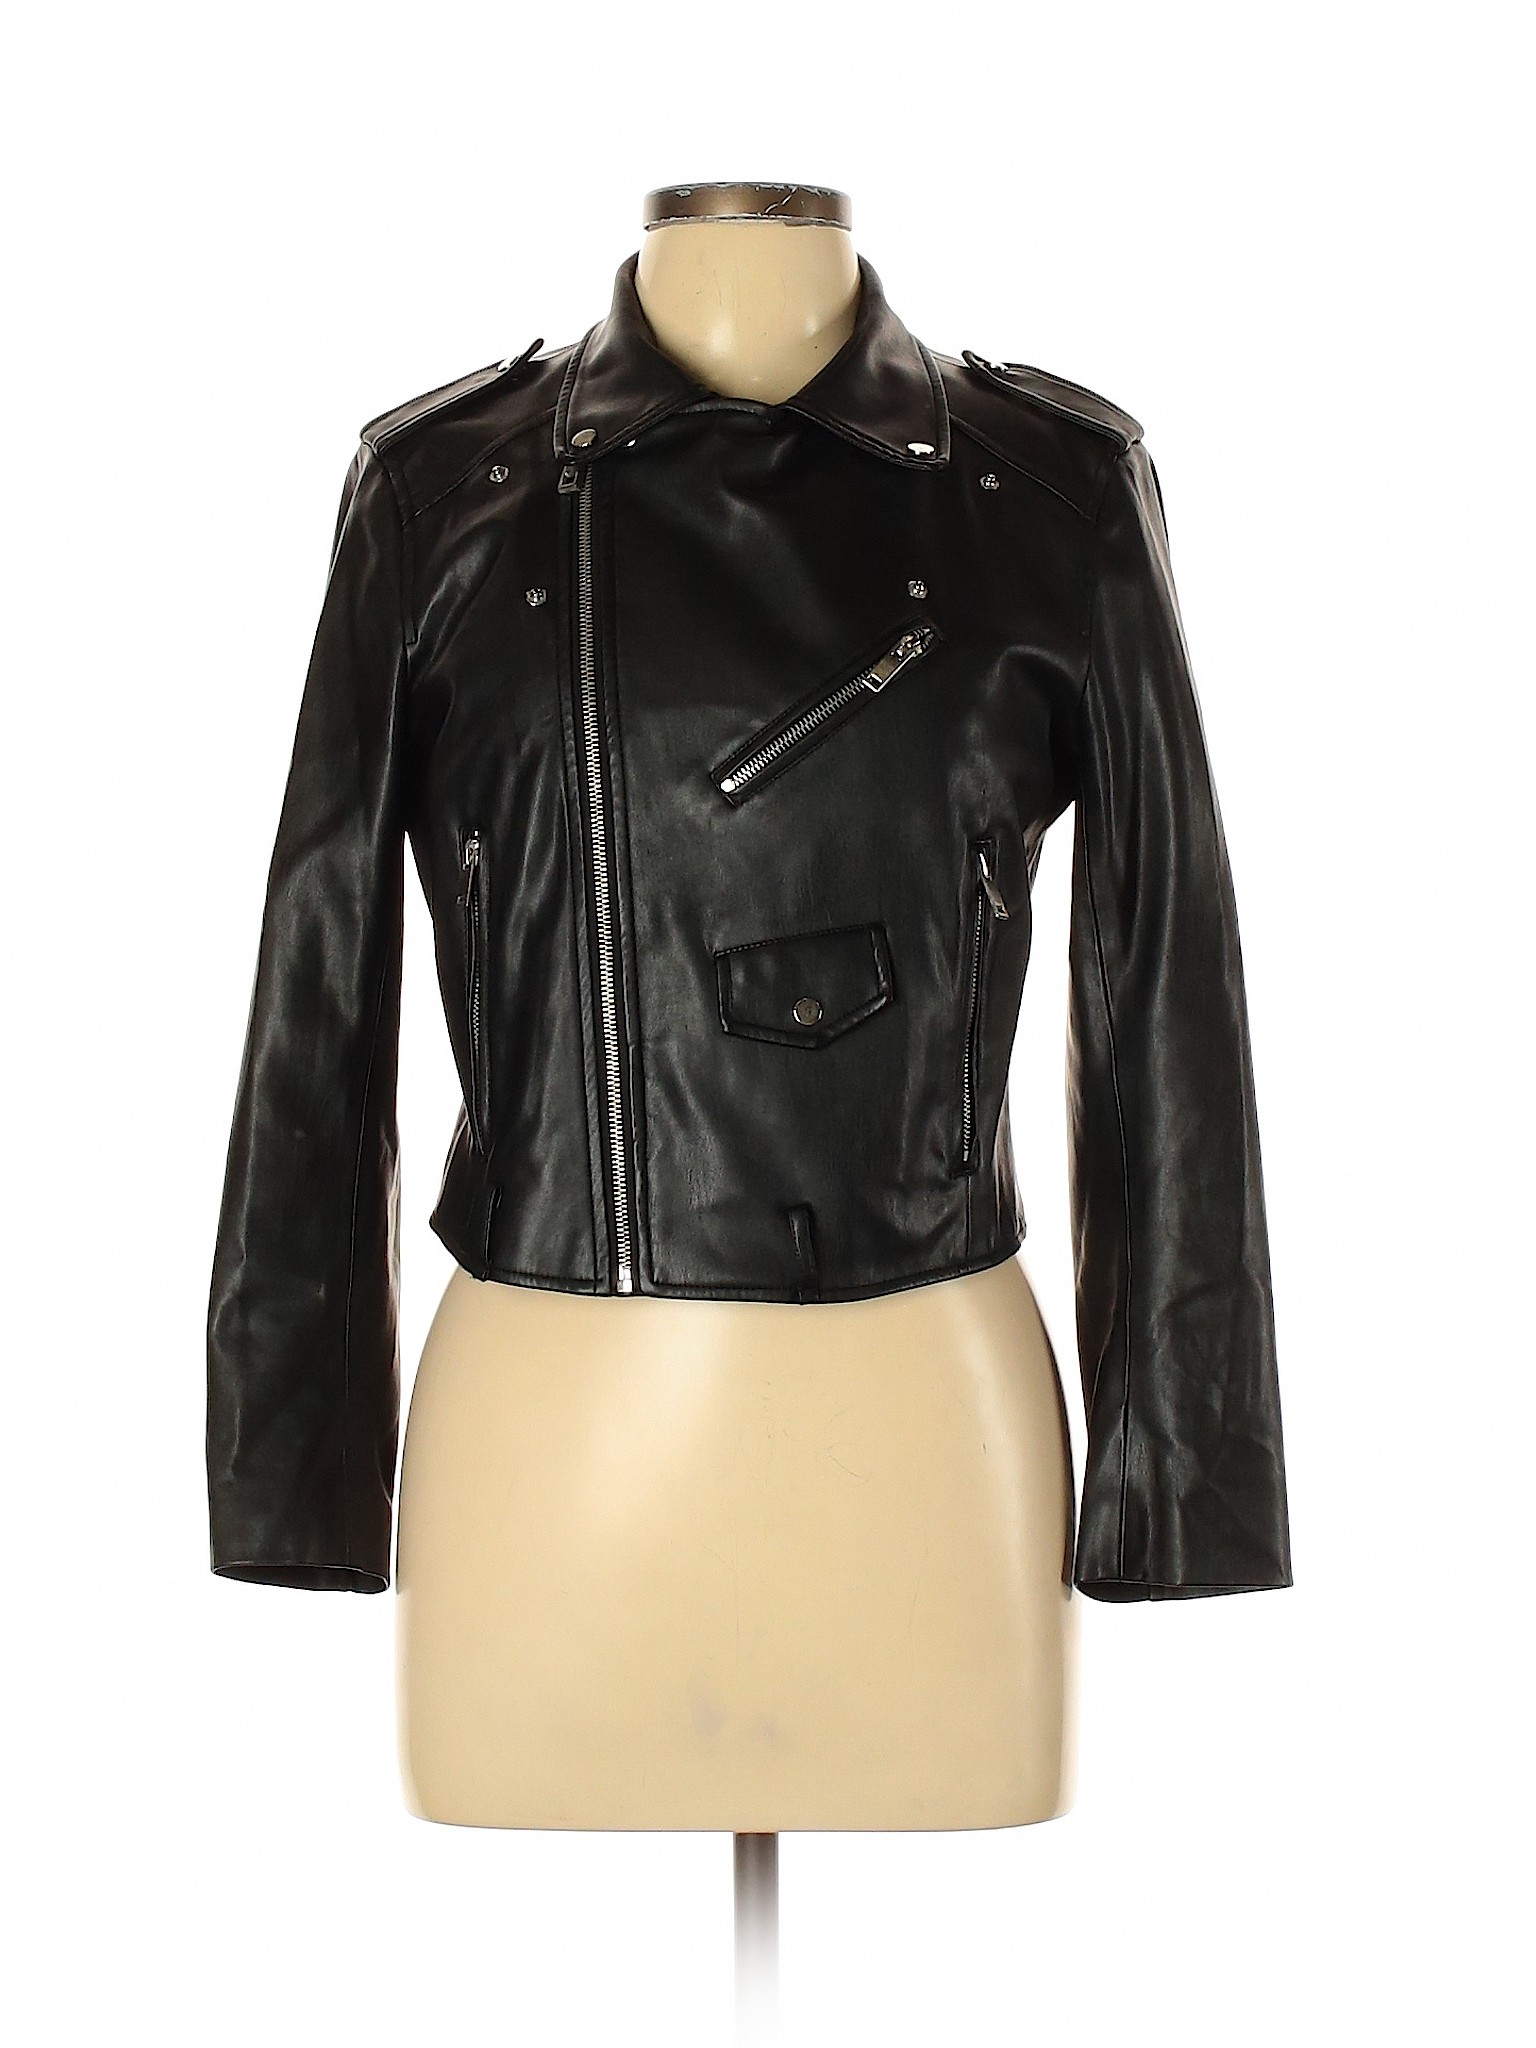 Zara Basic Women Black Faux Leather Jacket L | eBay